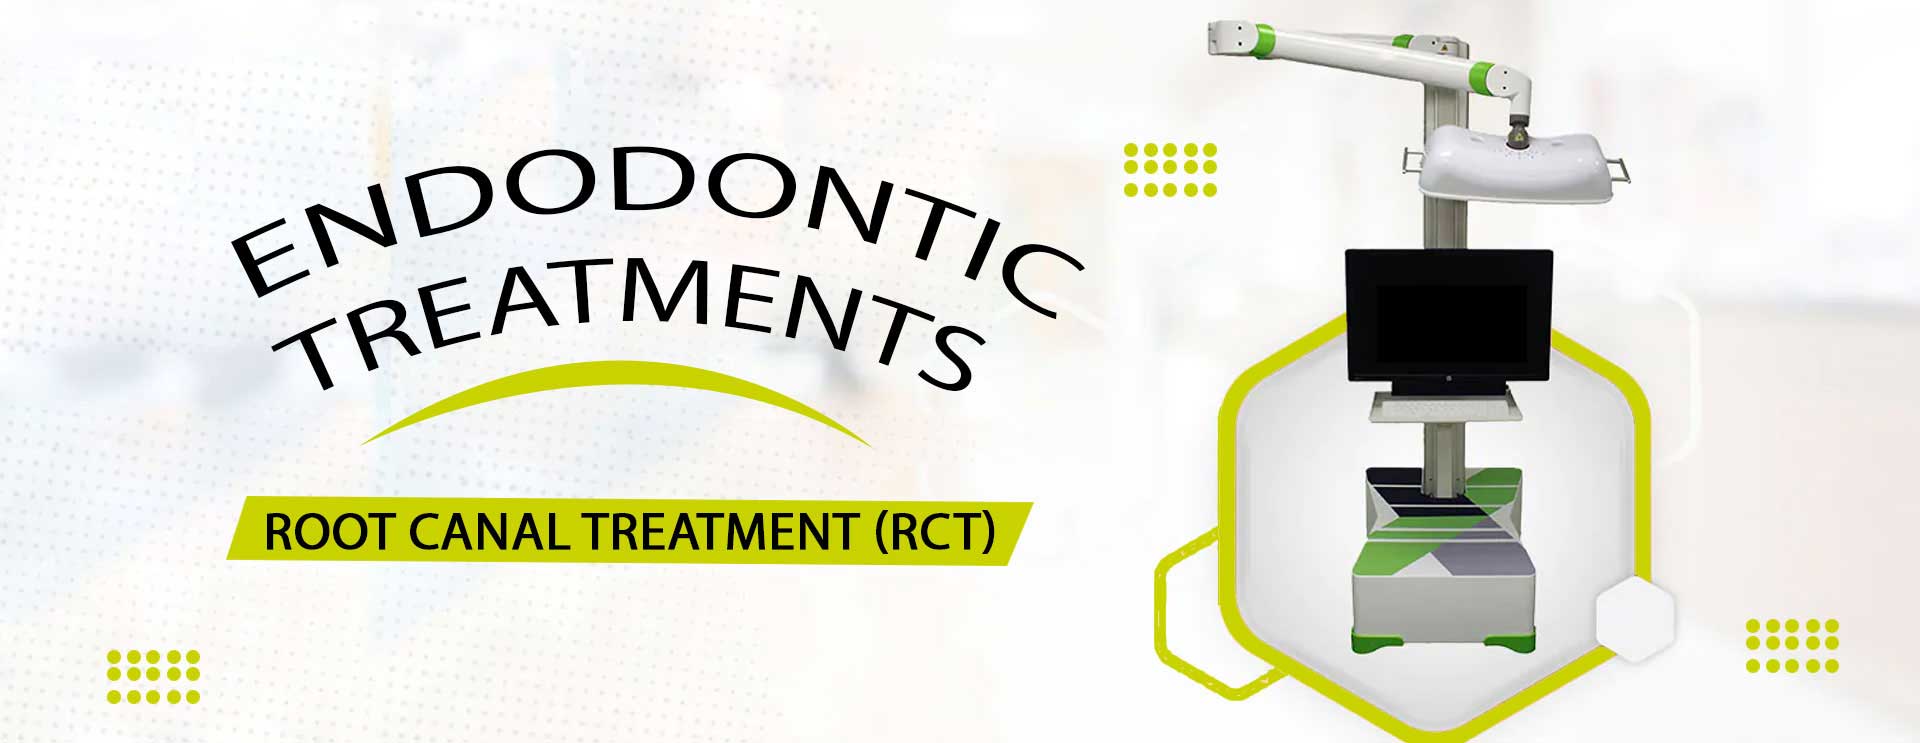 Endodontic Treatments in New City Light